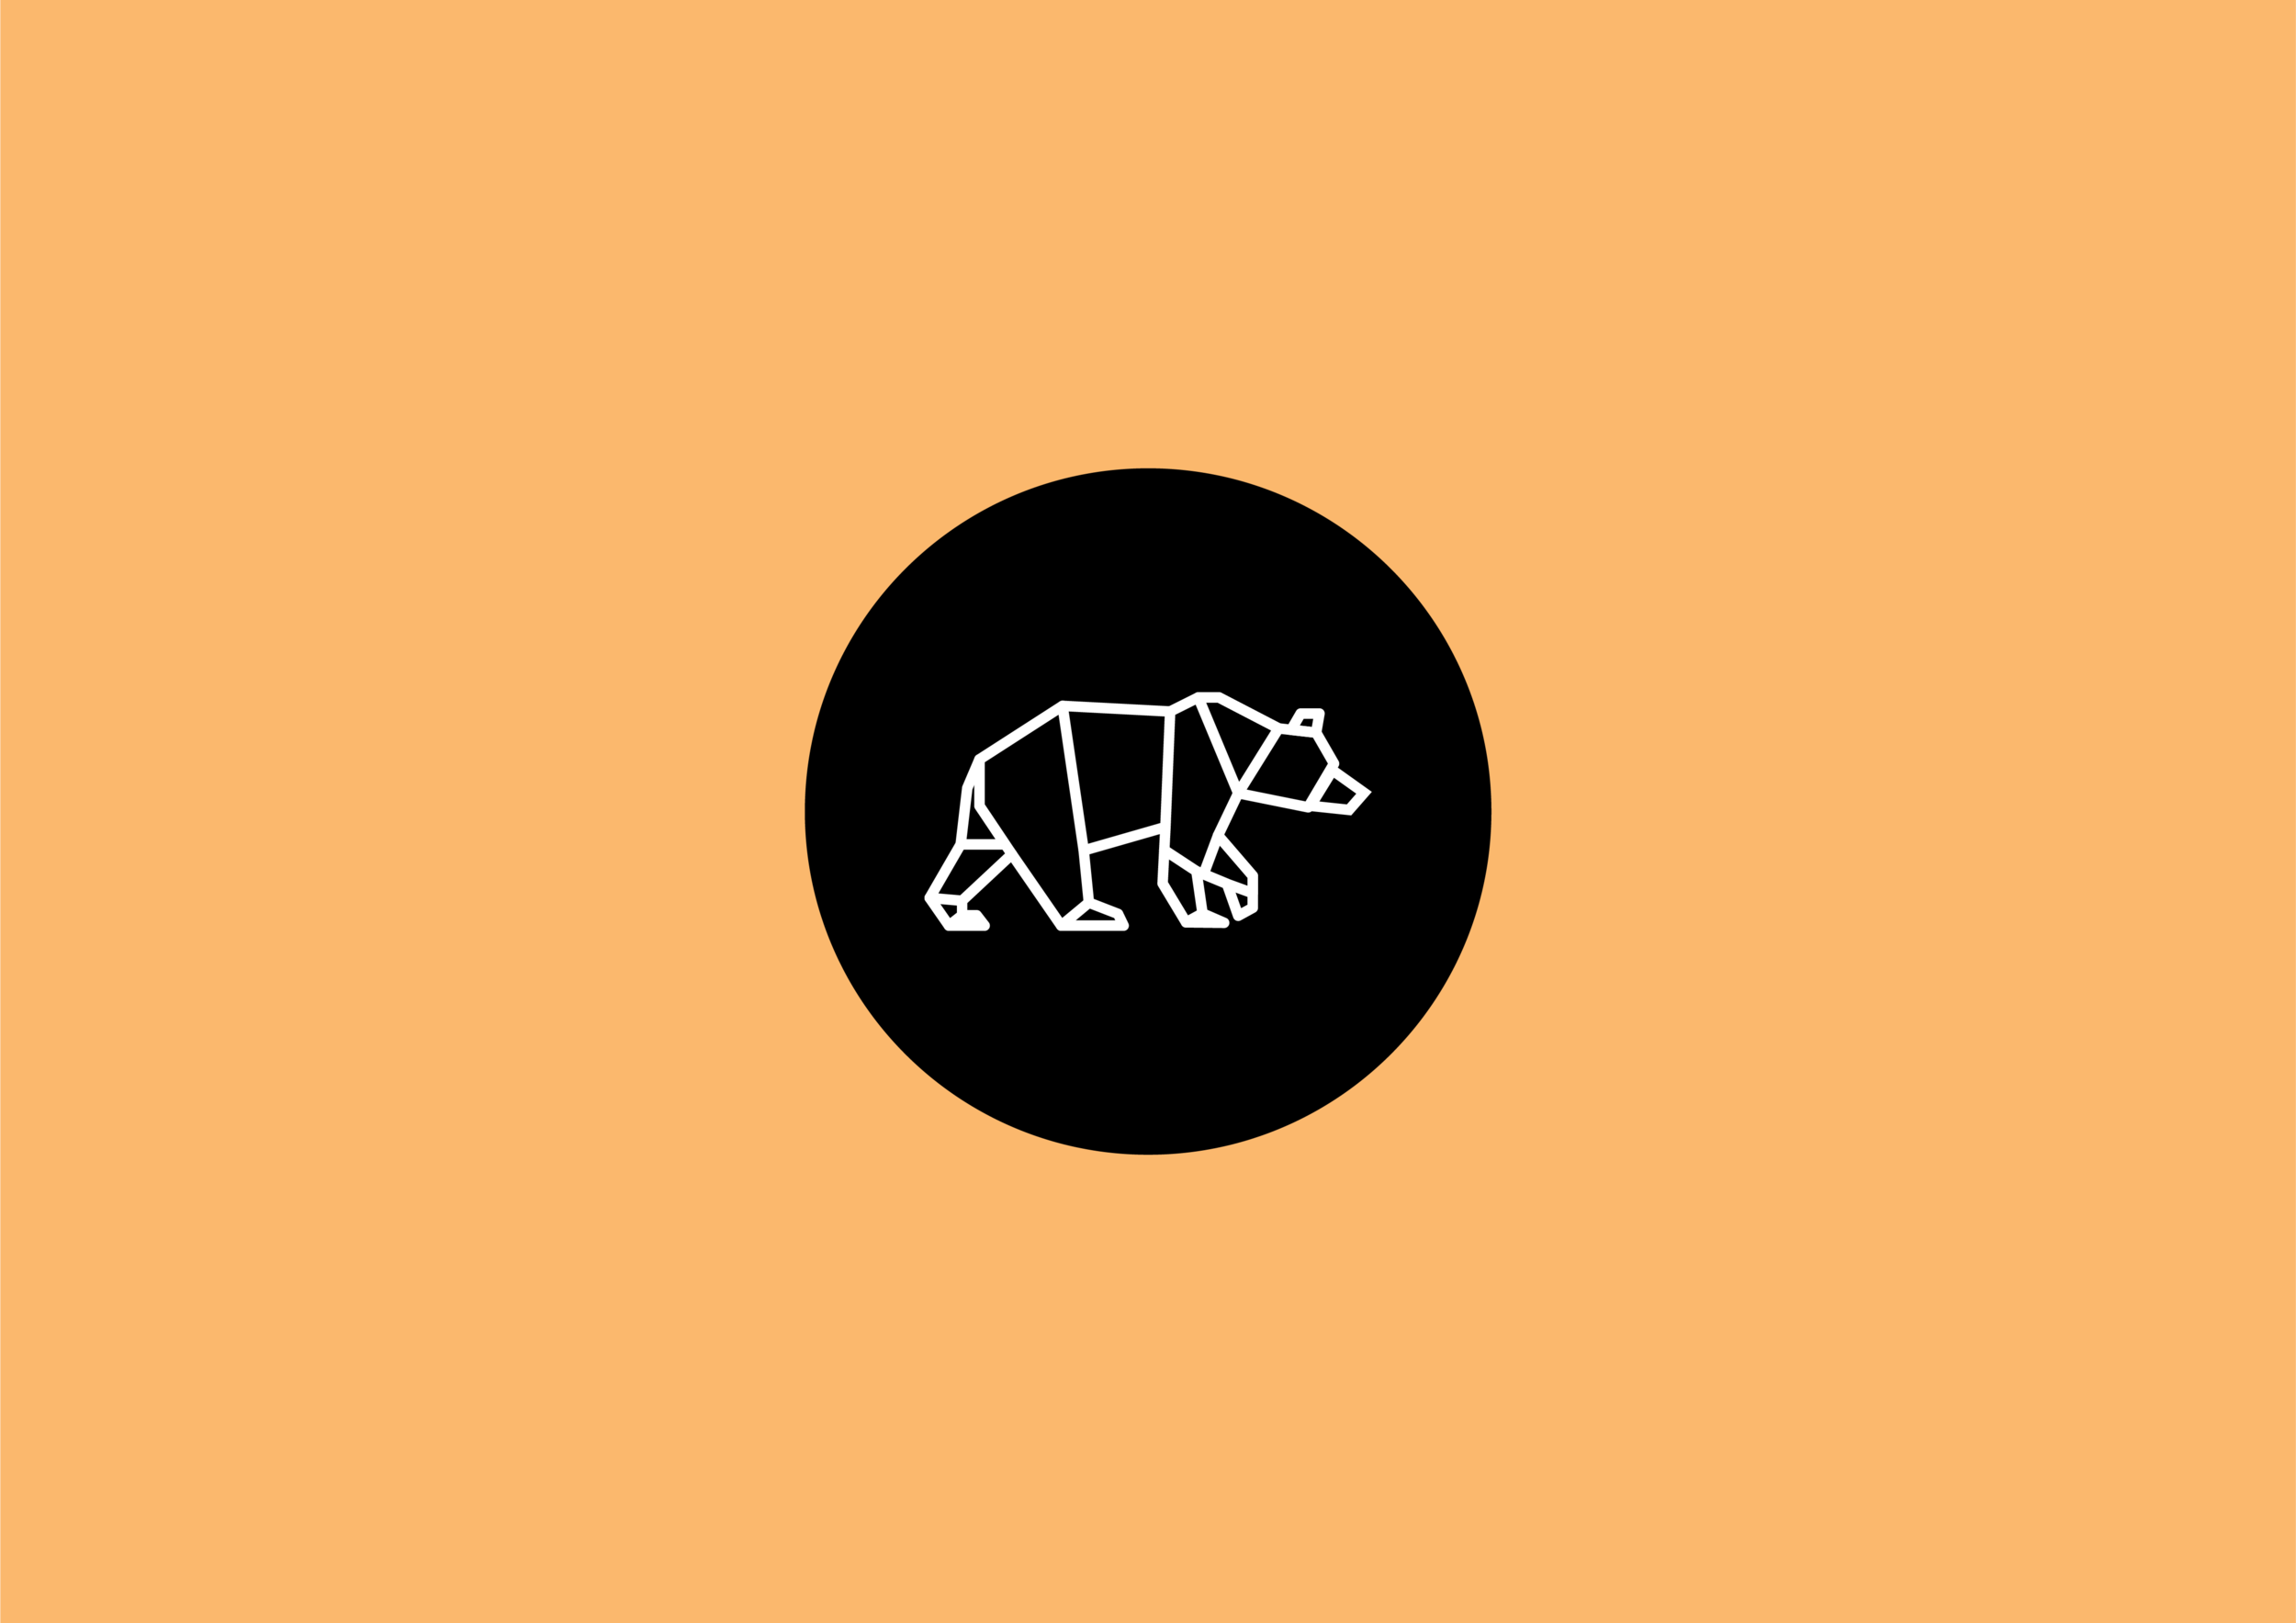 Drink packaging design - Bear vector circle logo in orange background